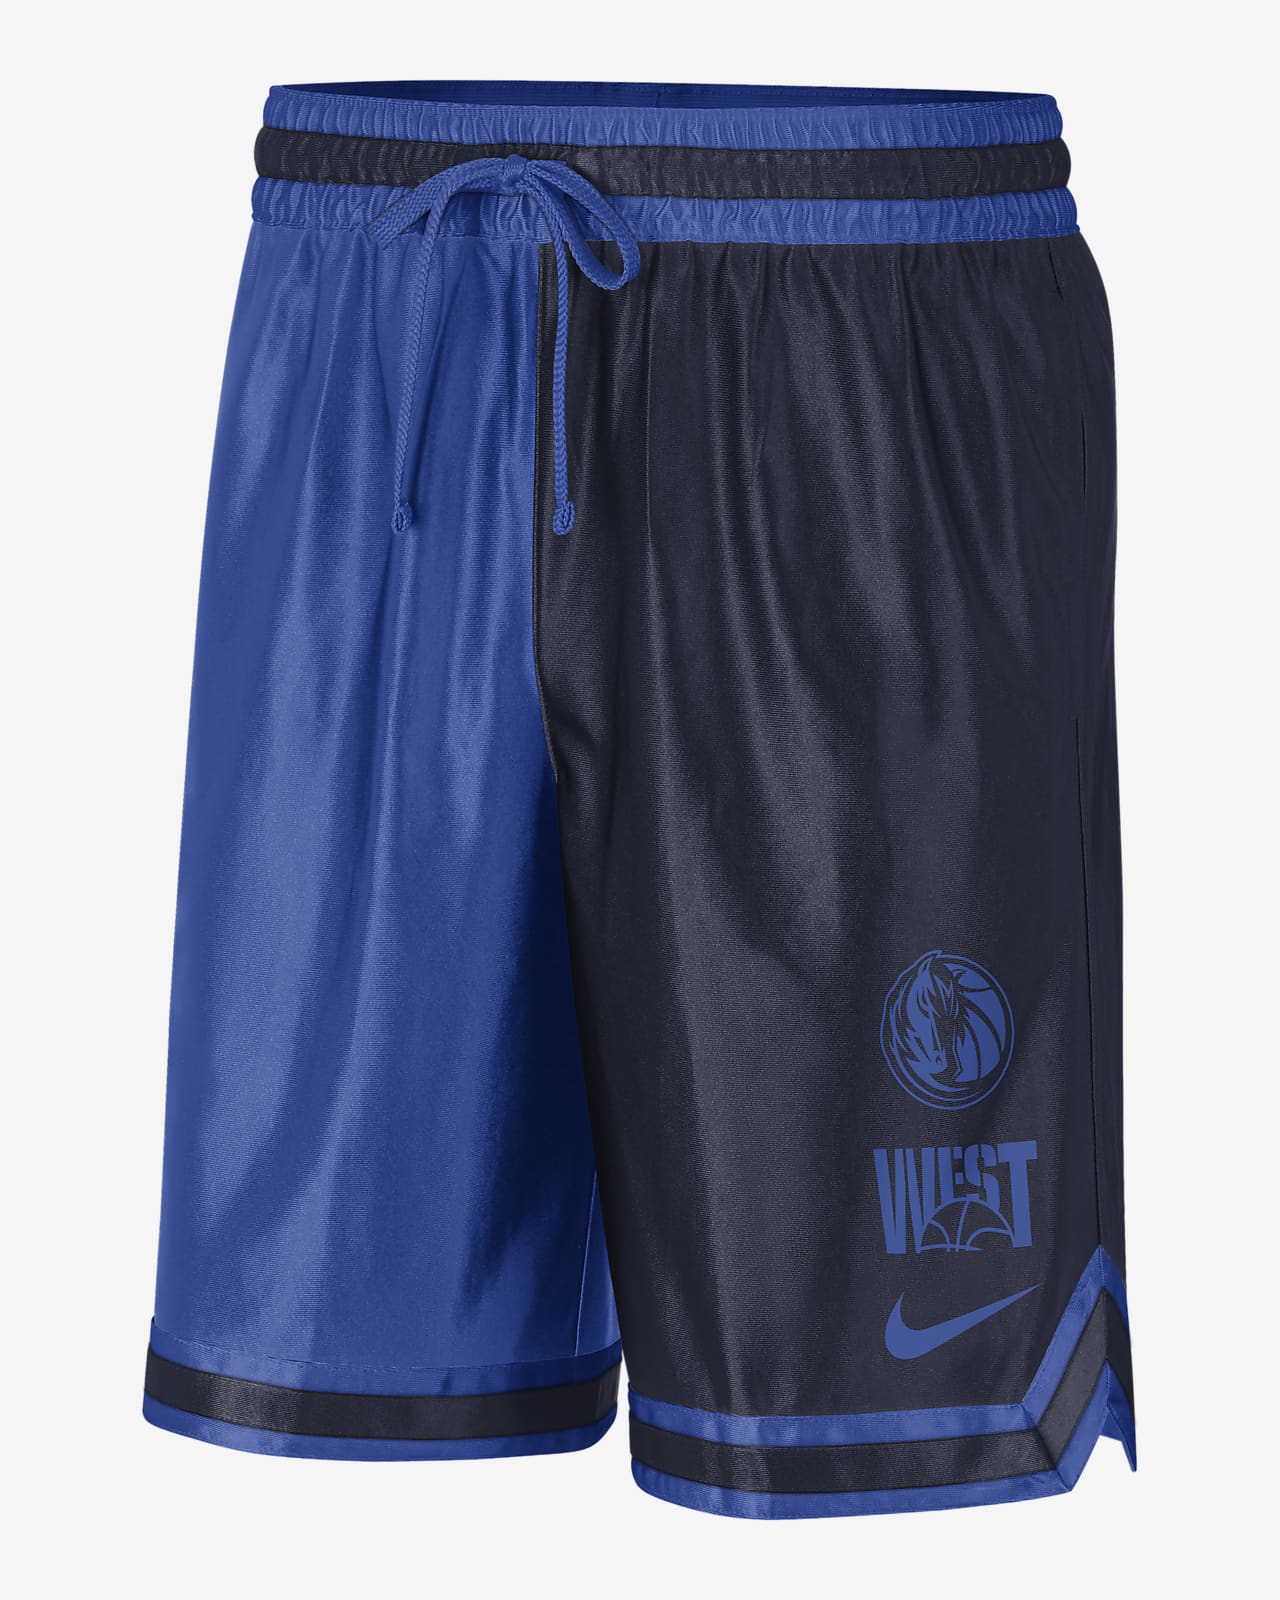 Shorts con gráfico de la NBA Nike Dri-FIT para hombre Dallas Mavericks Courtside